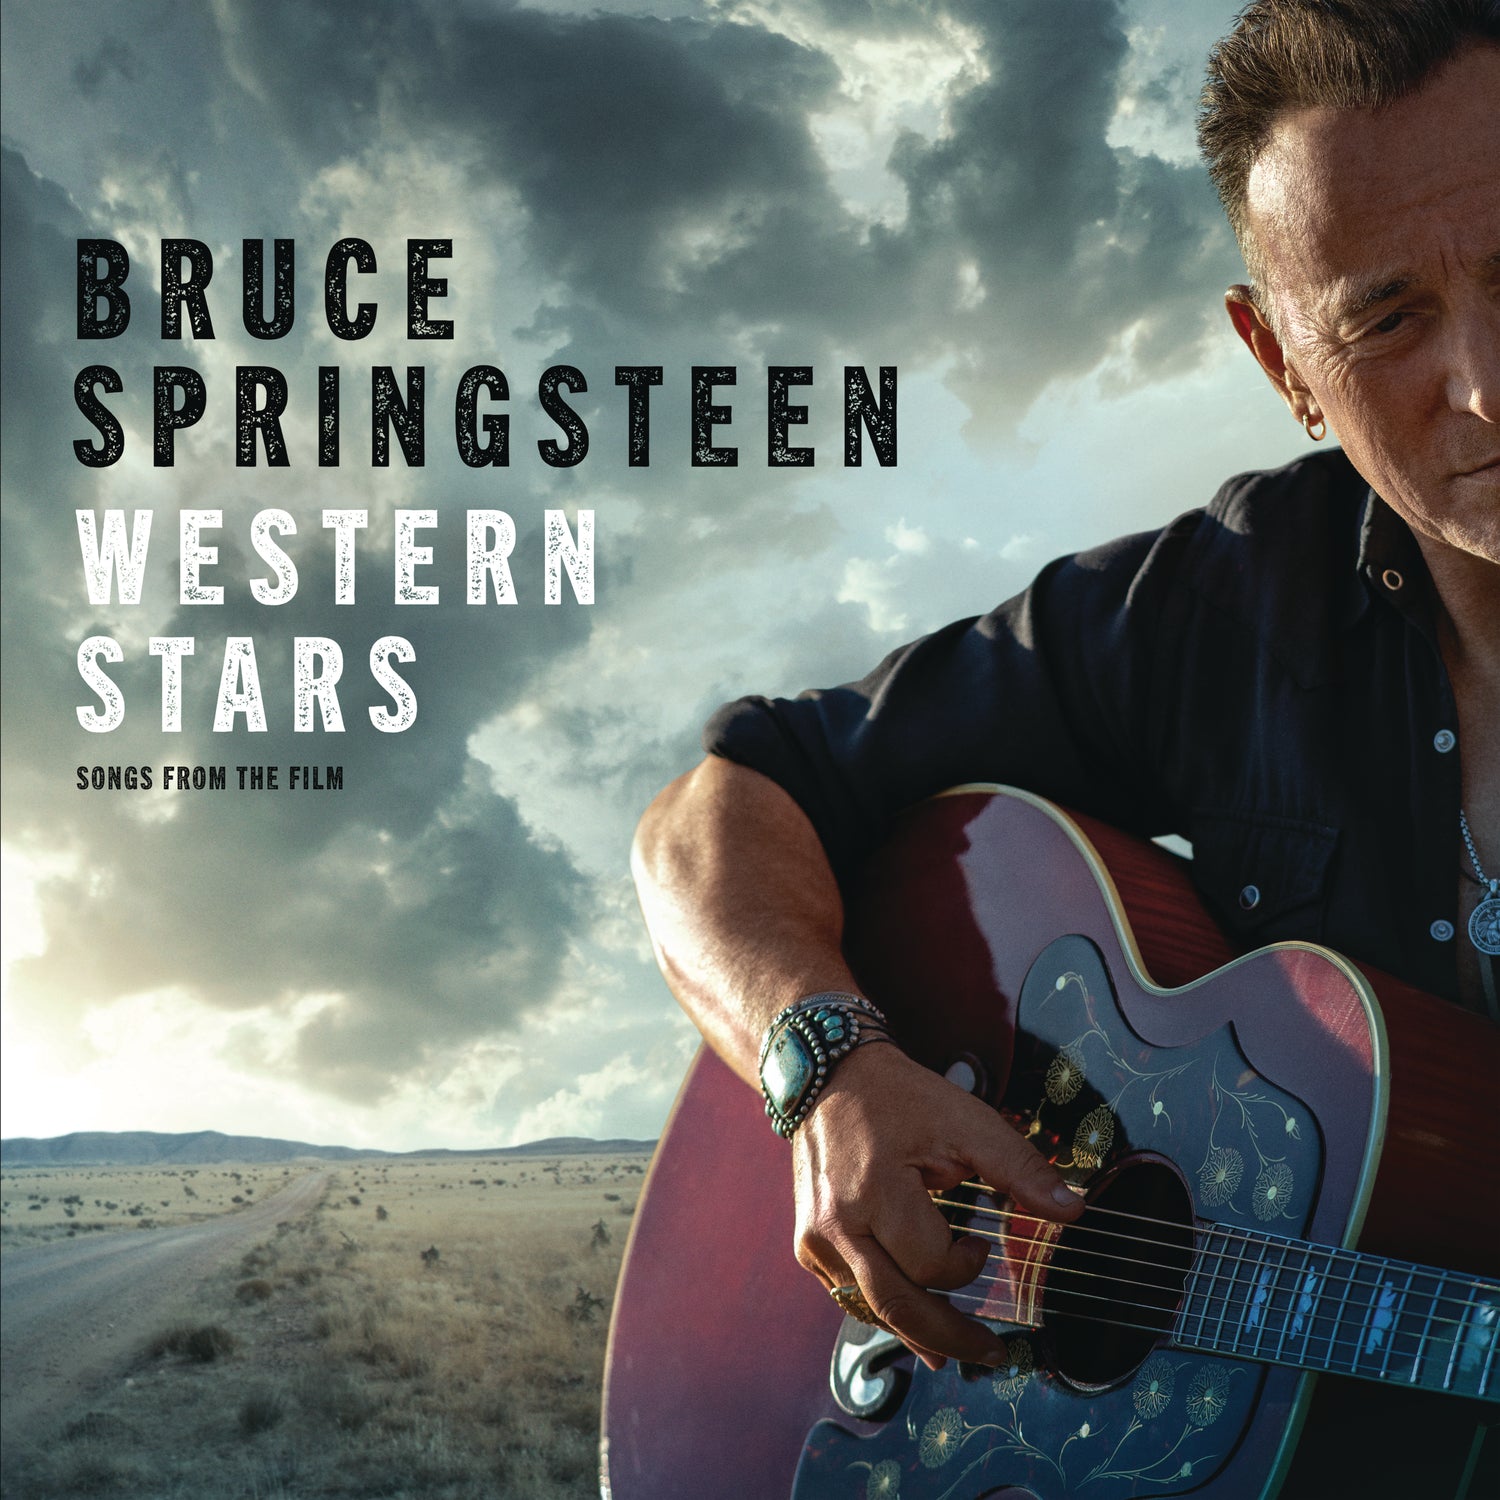 Bruce Springsteen Western Stars - Songs From The Film Vinyl